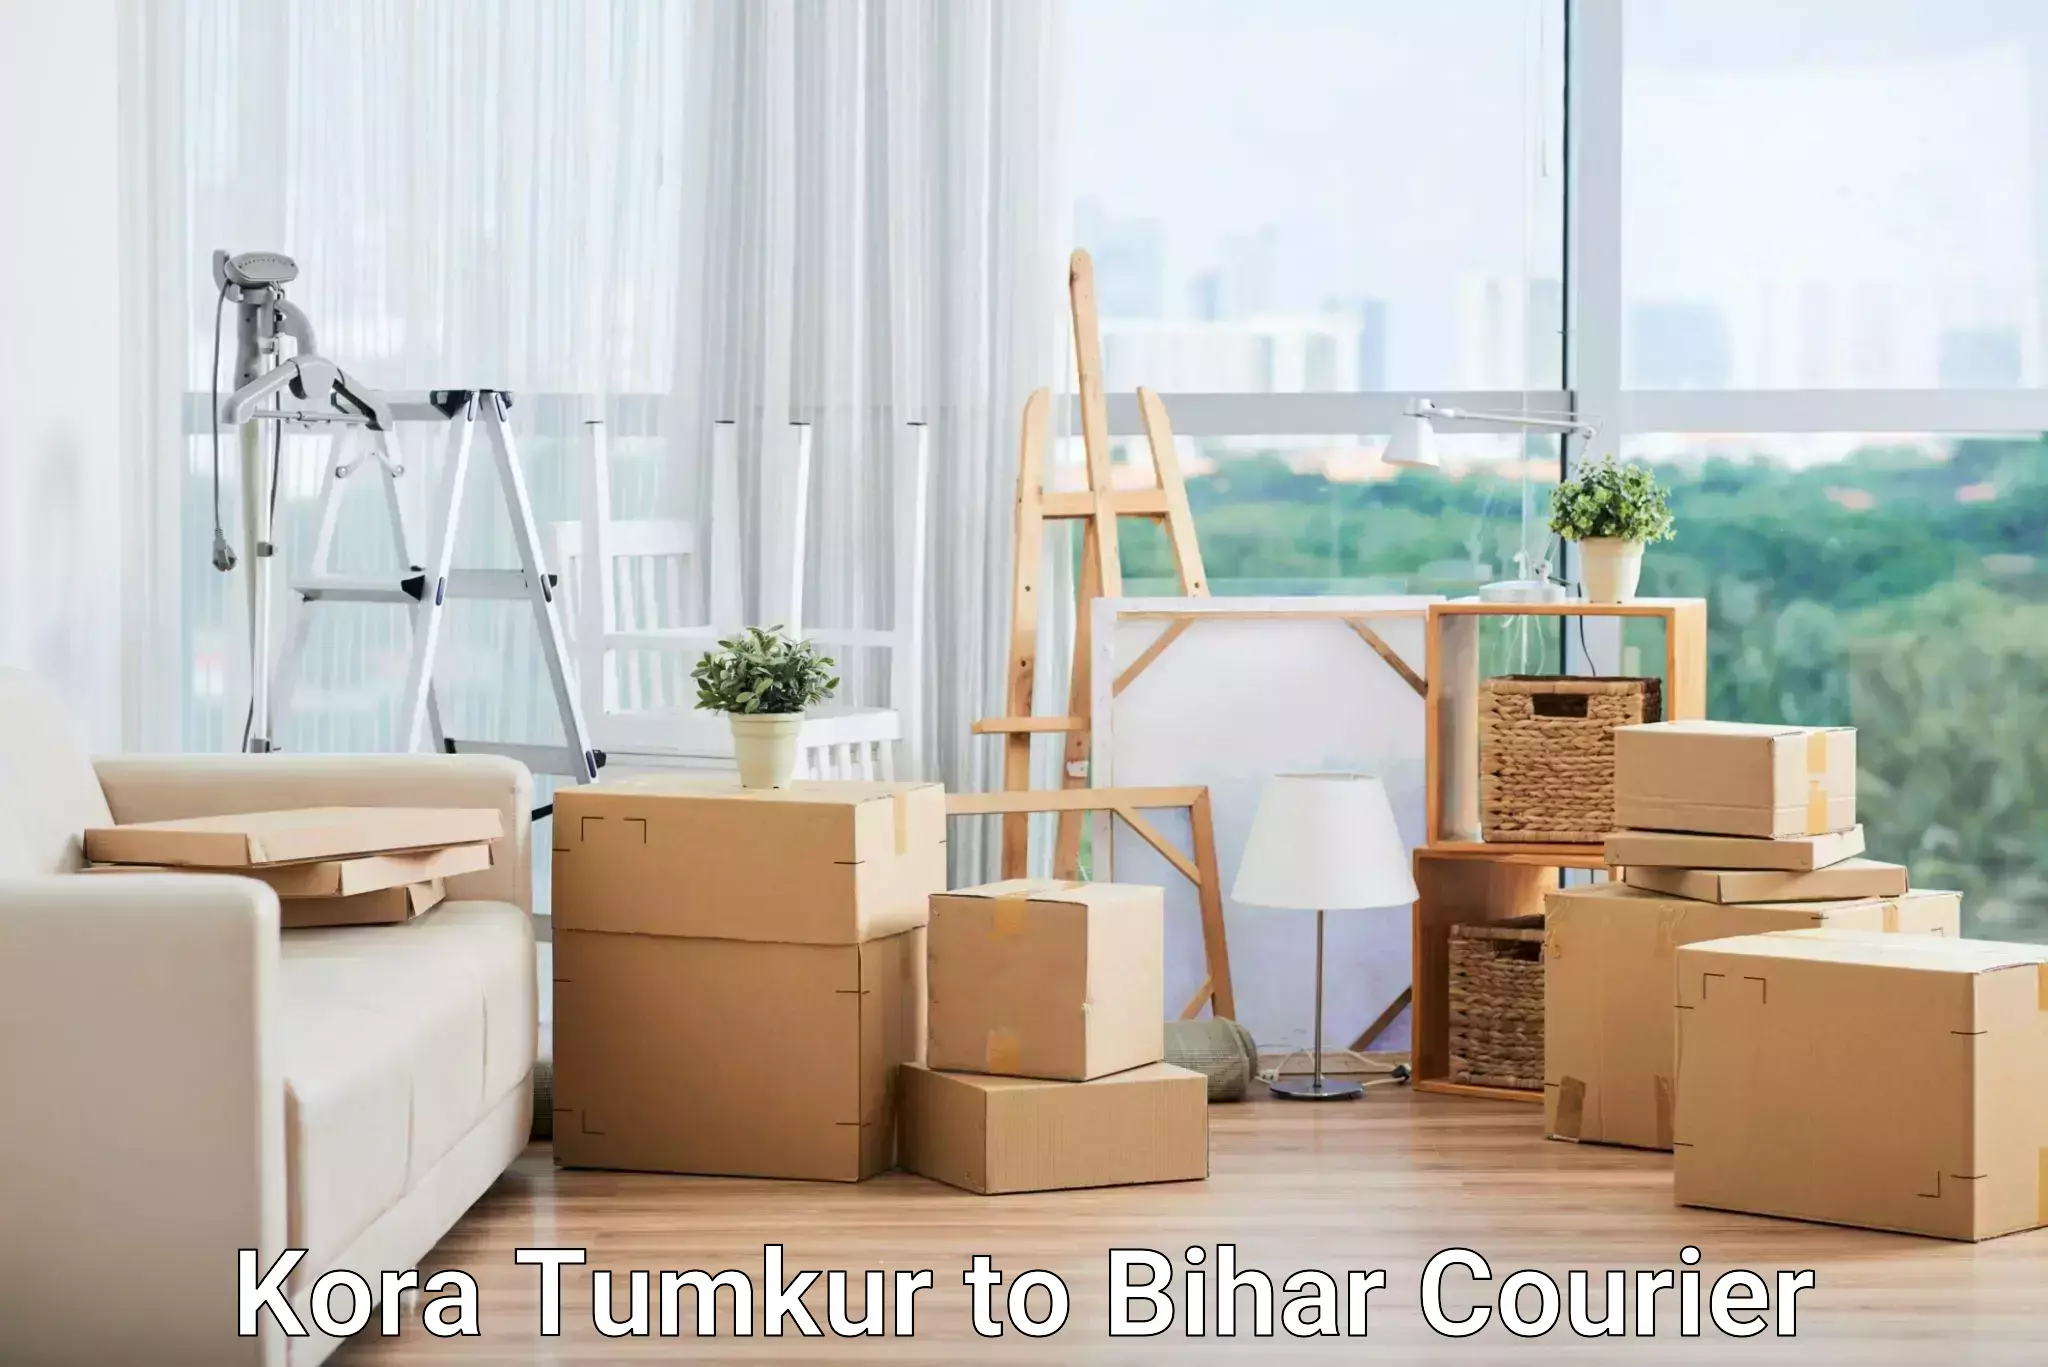 Large package courier in Kora Tumkur to Aurangabad Bihar